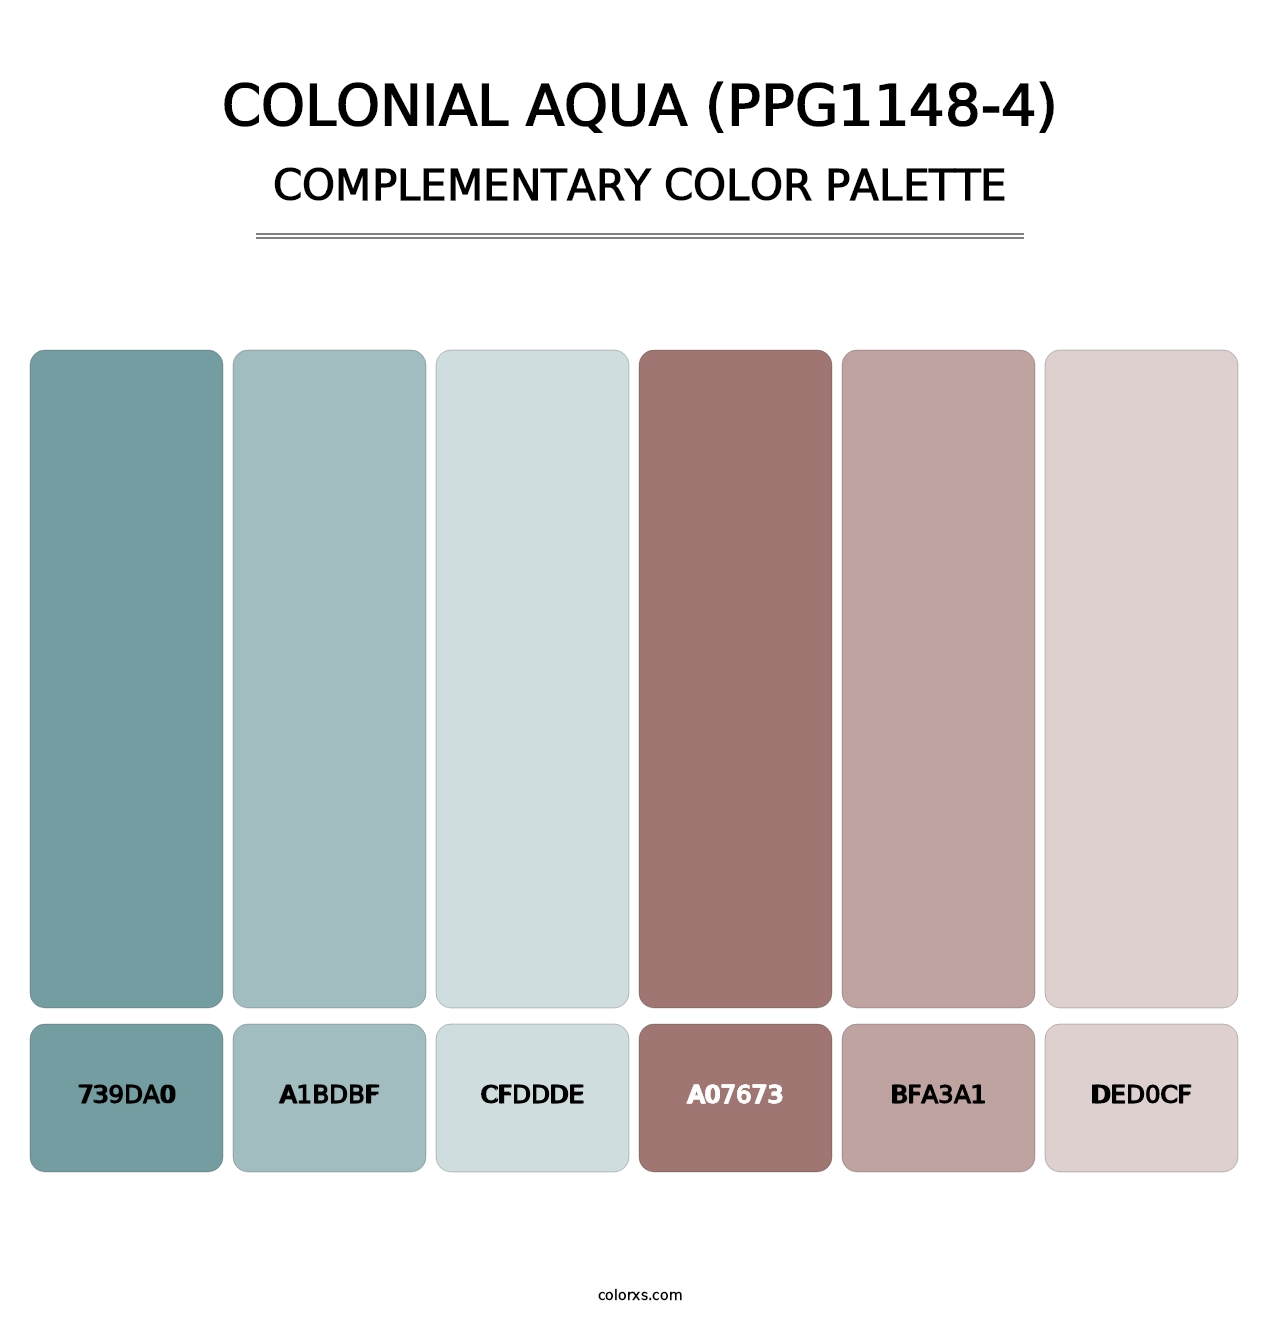 Colonial Aqua (PPG1148-4) - Complementary Color Palette